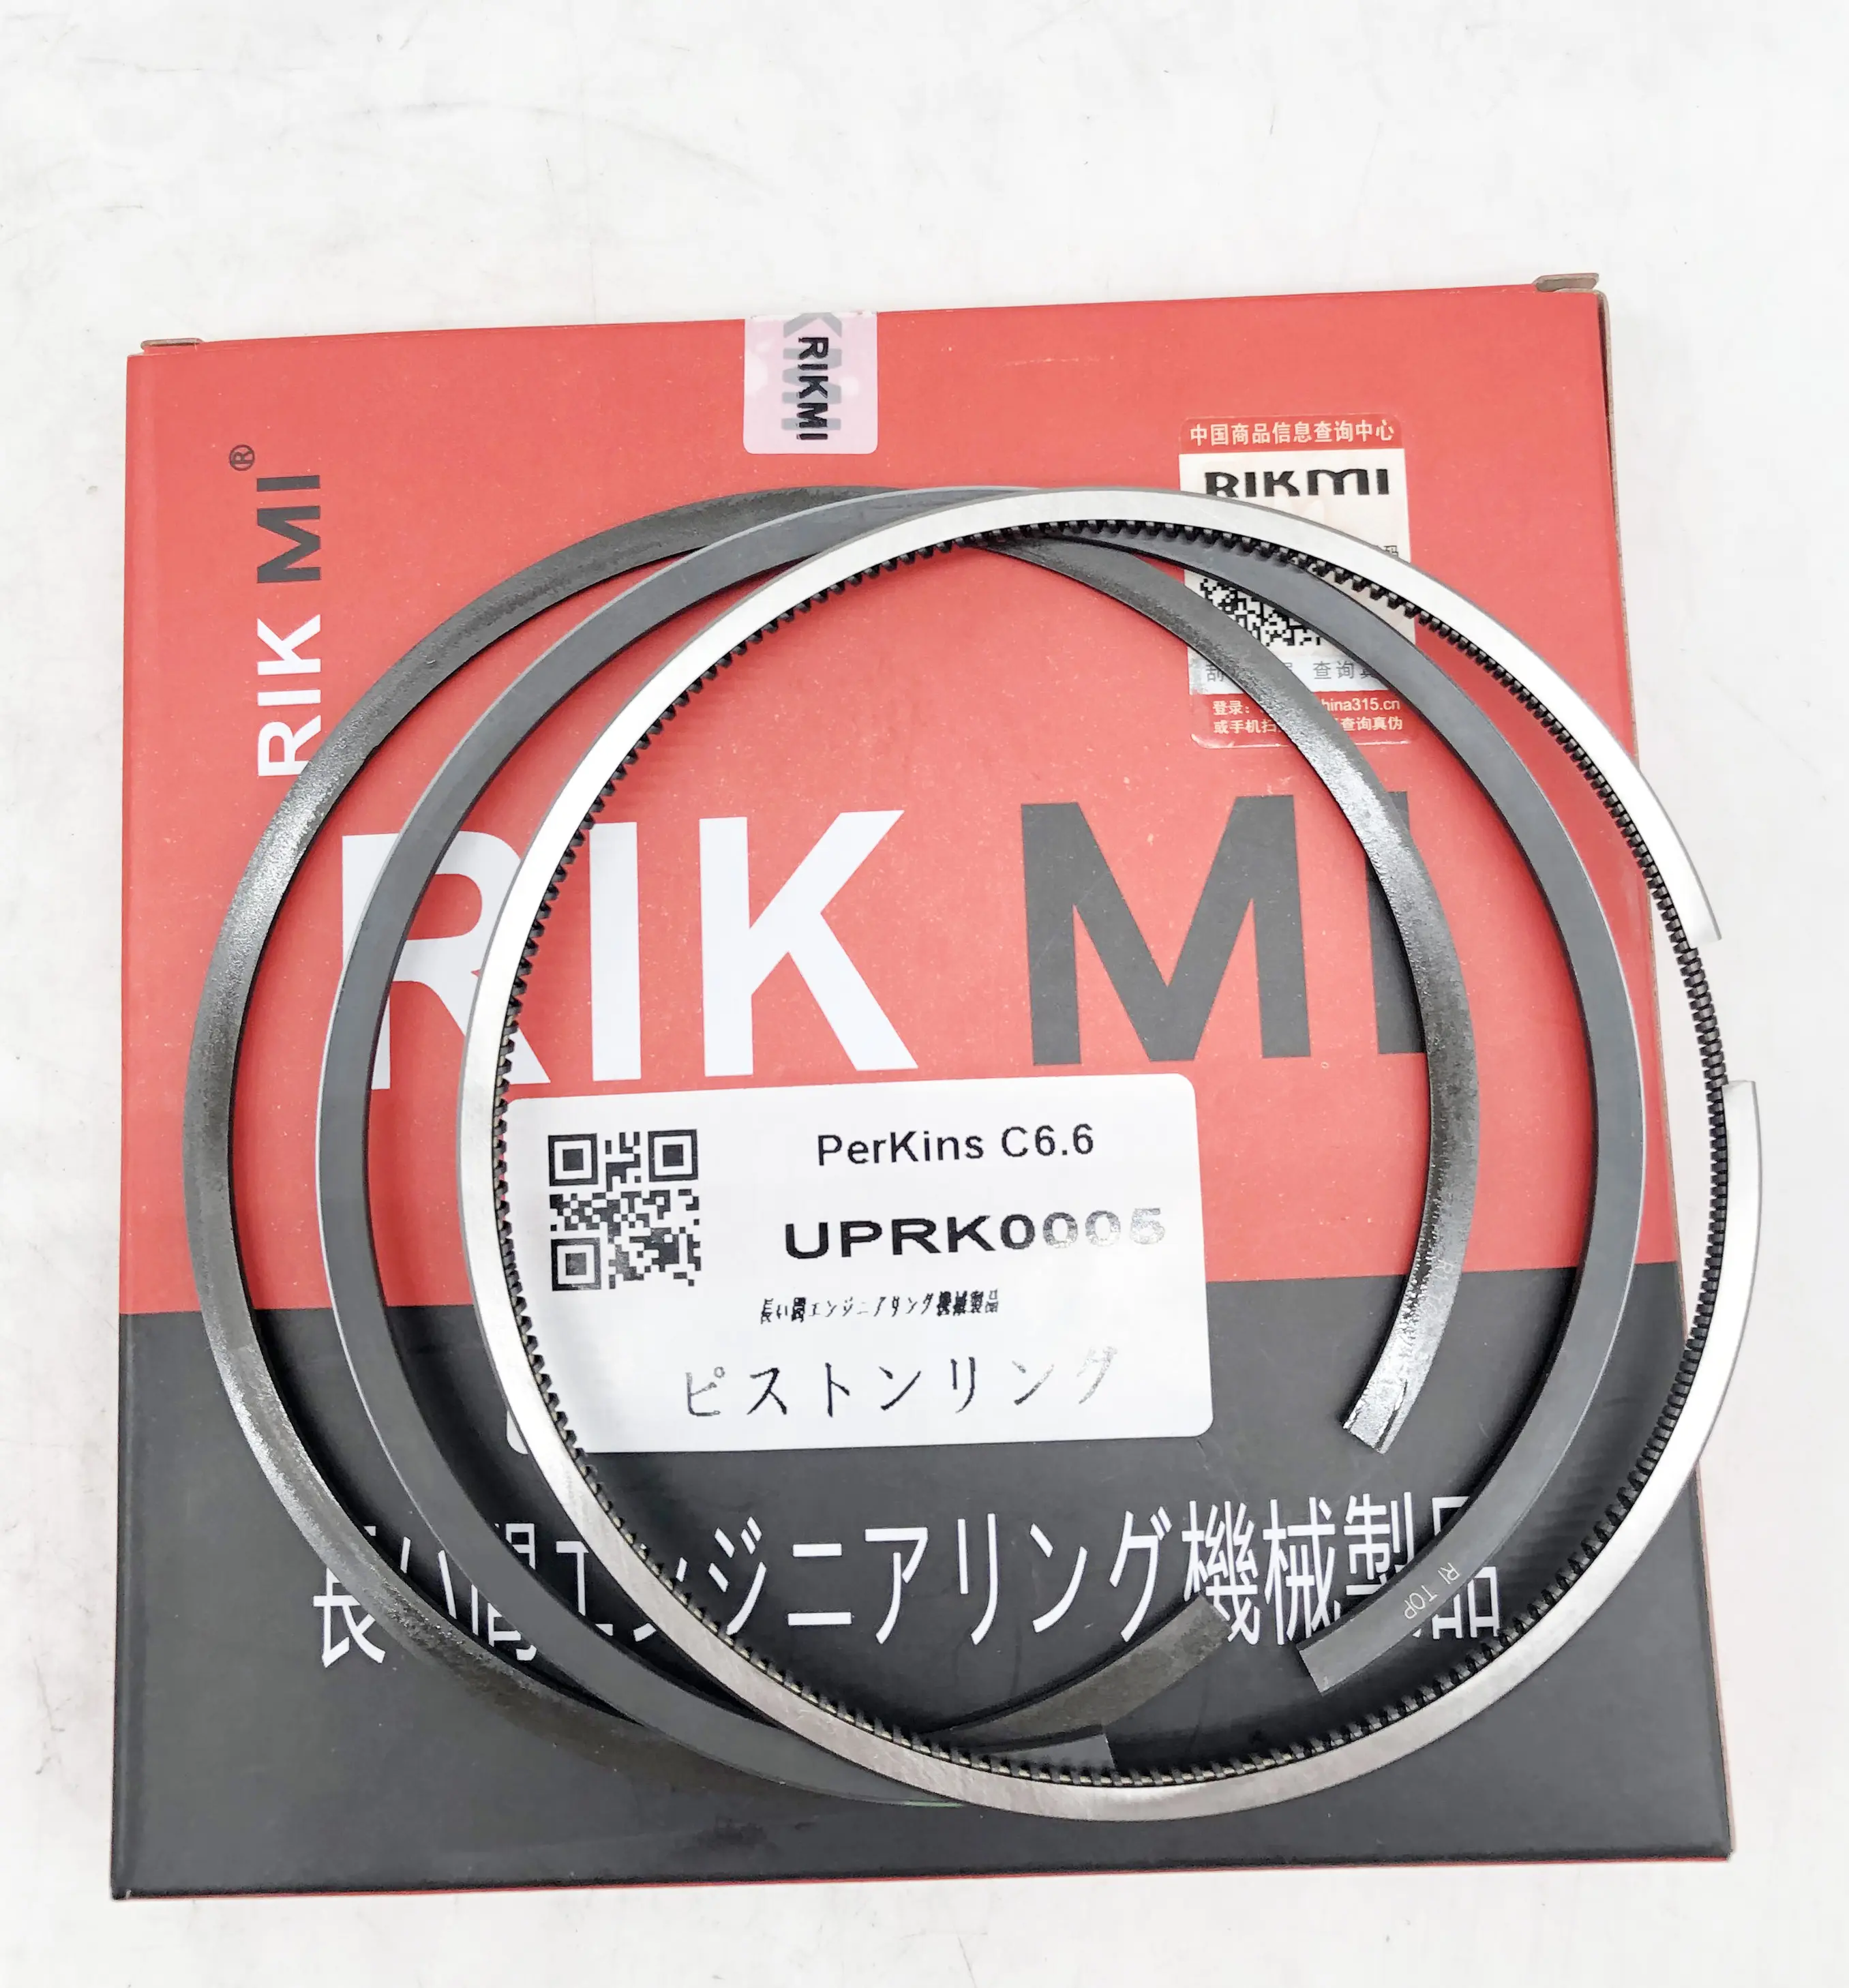 Rikmi גבוהה באיכות בוכנה טבעת לפרקינס C6.6 C7.1 C4.4 דיזל מנוע UPRK0005